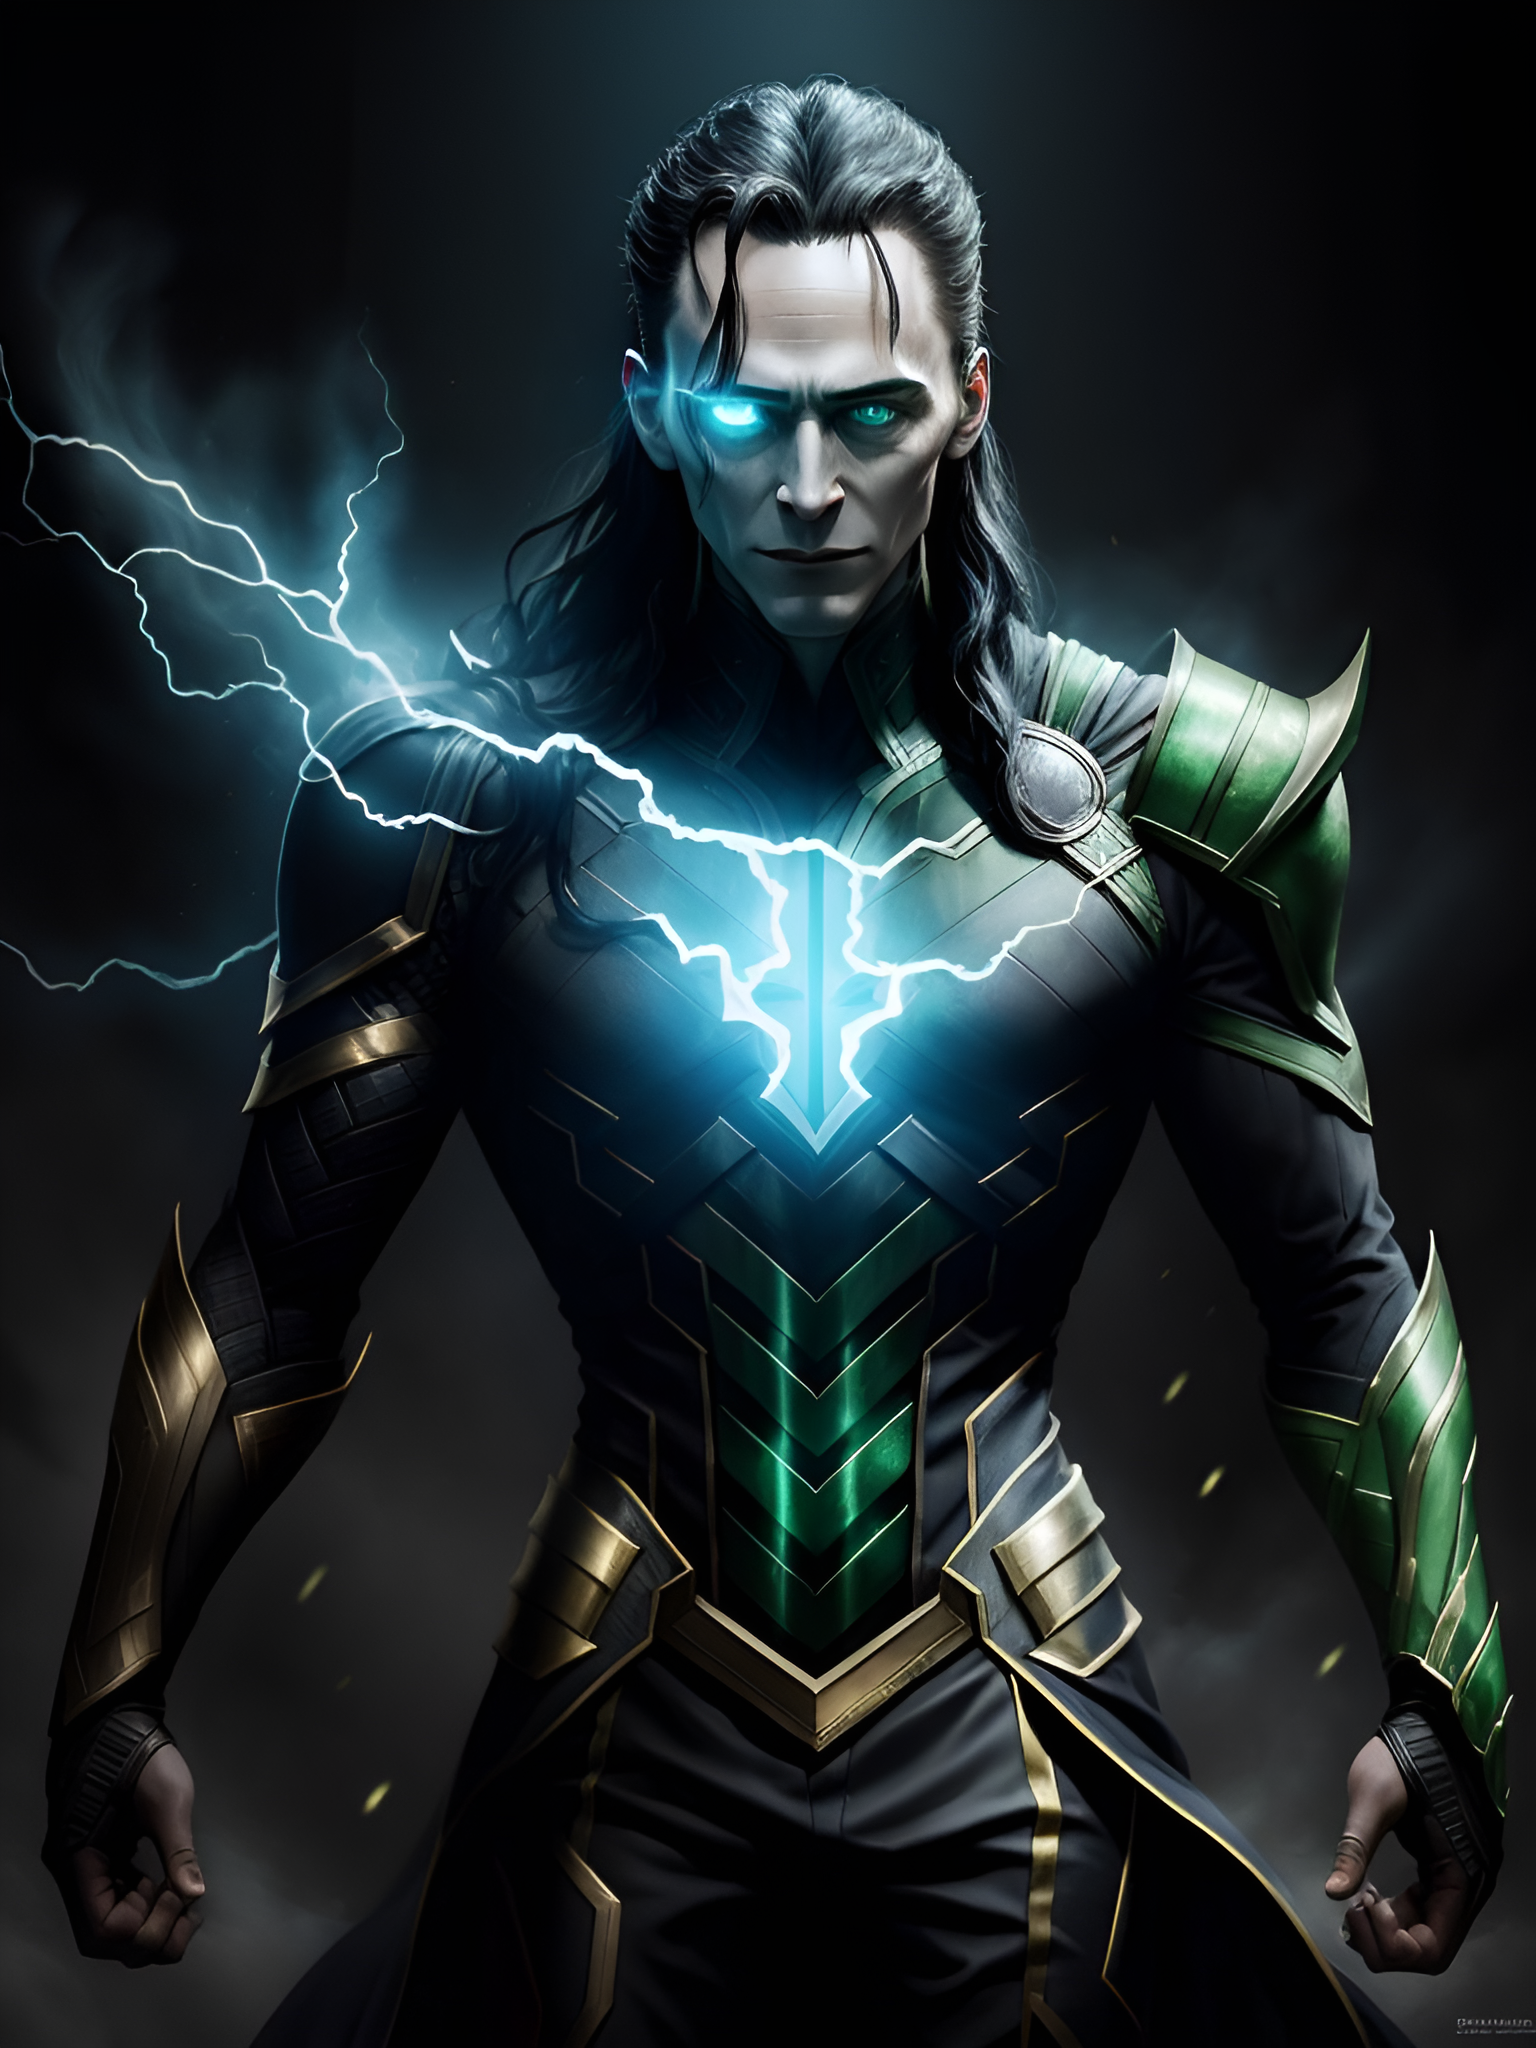 General 1536x2048 AI art Marvel Comics Loki portrait display villains looking at viewer lightning armor glowing eyes